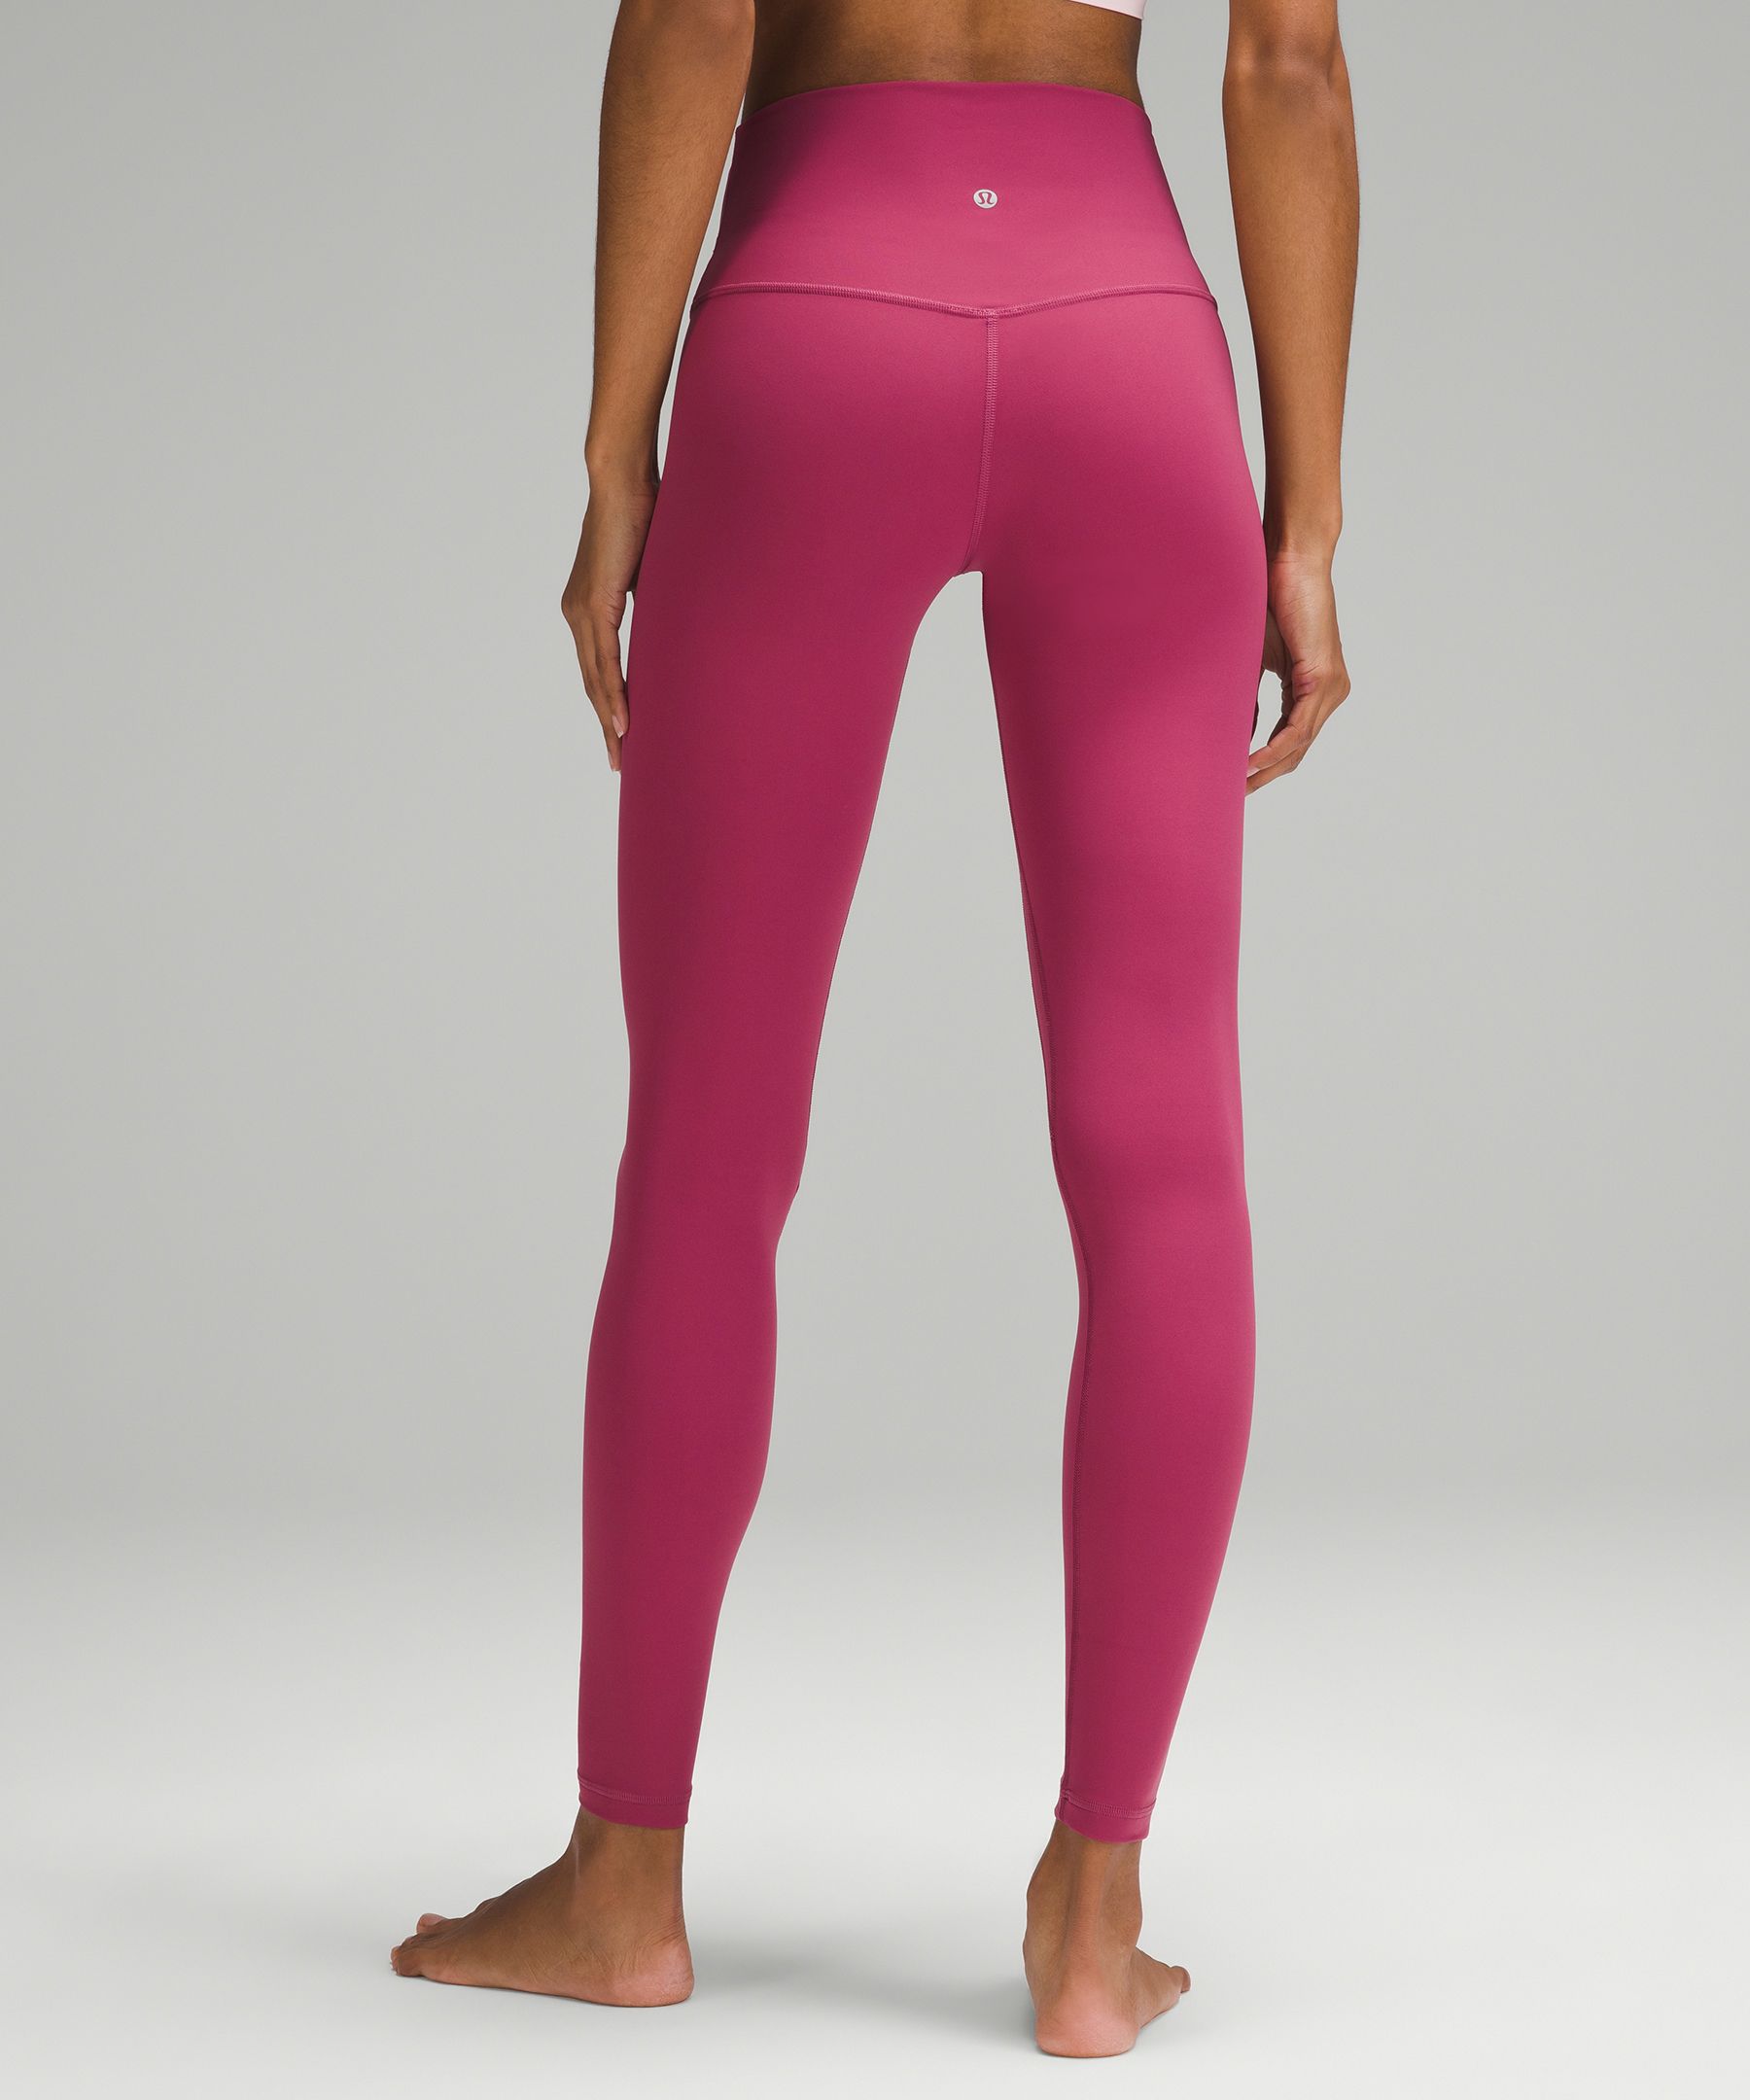 Lululemon Sonic Pink Align Leggings Size 4 - $84 (28% Off Retail